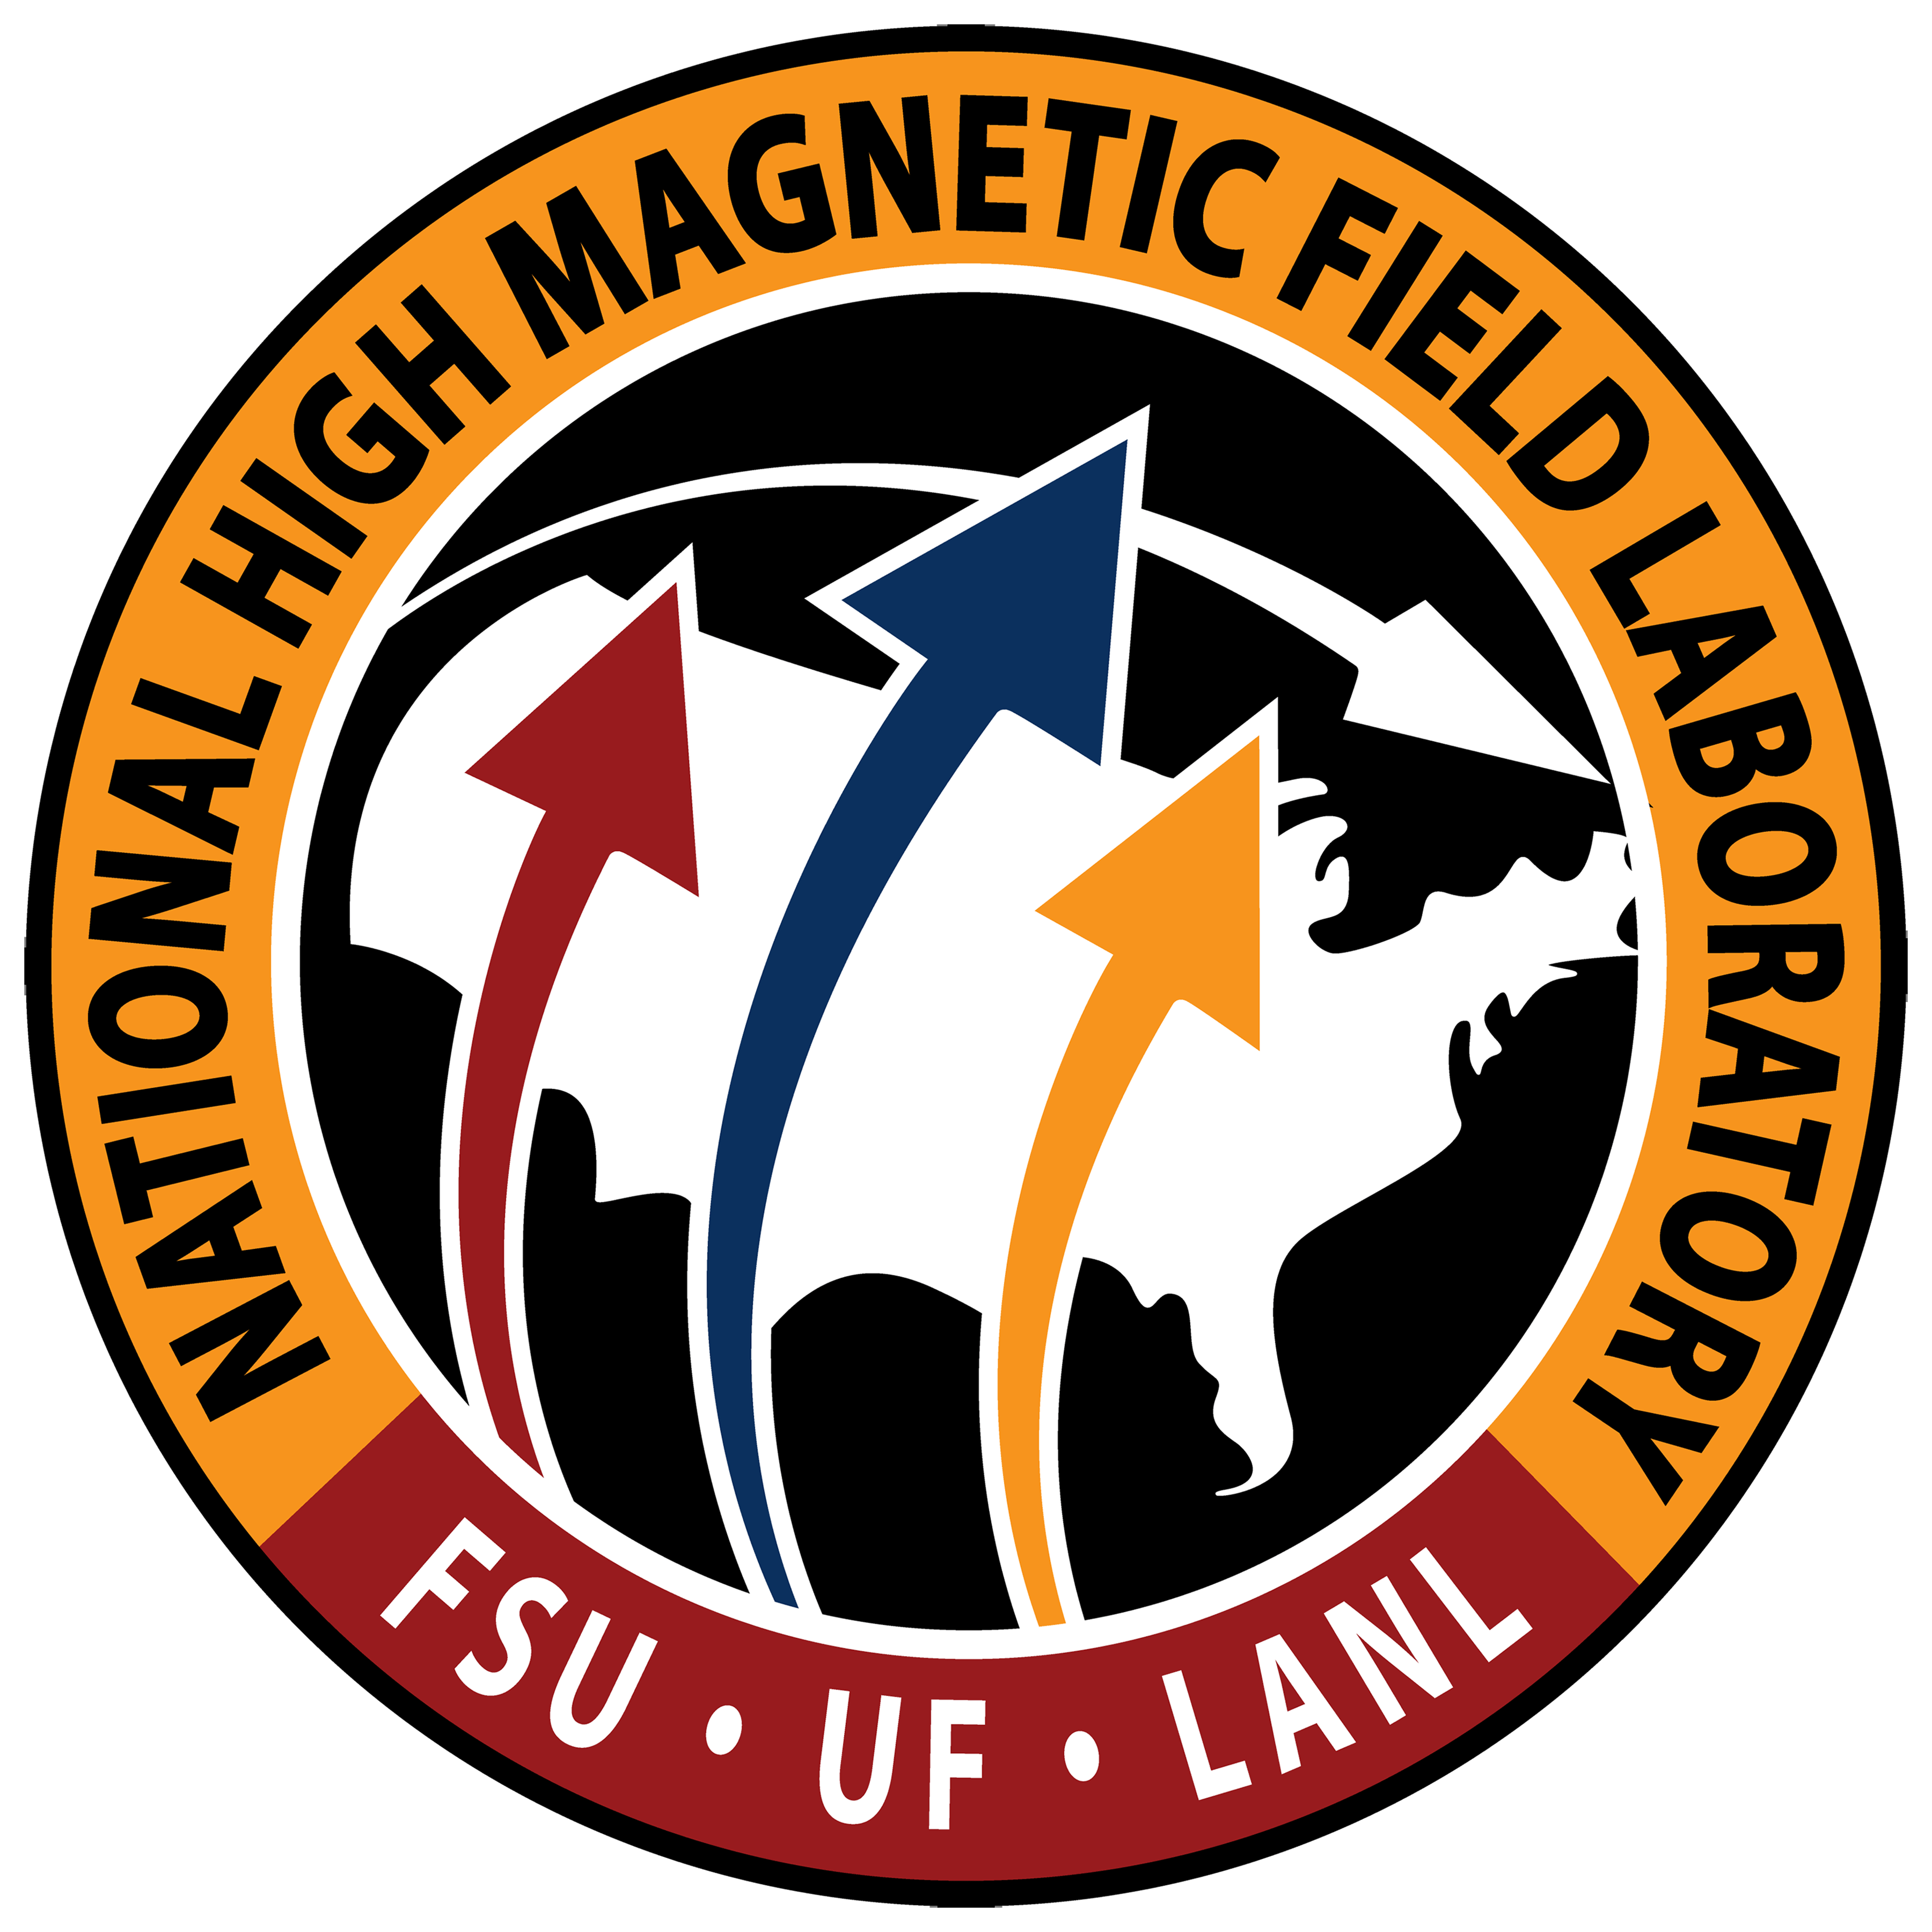 LANL Logo - public.magnet.fsu.edu - /Logos/